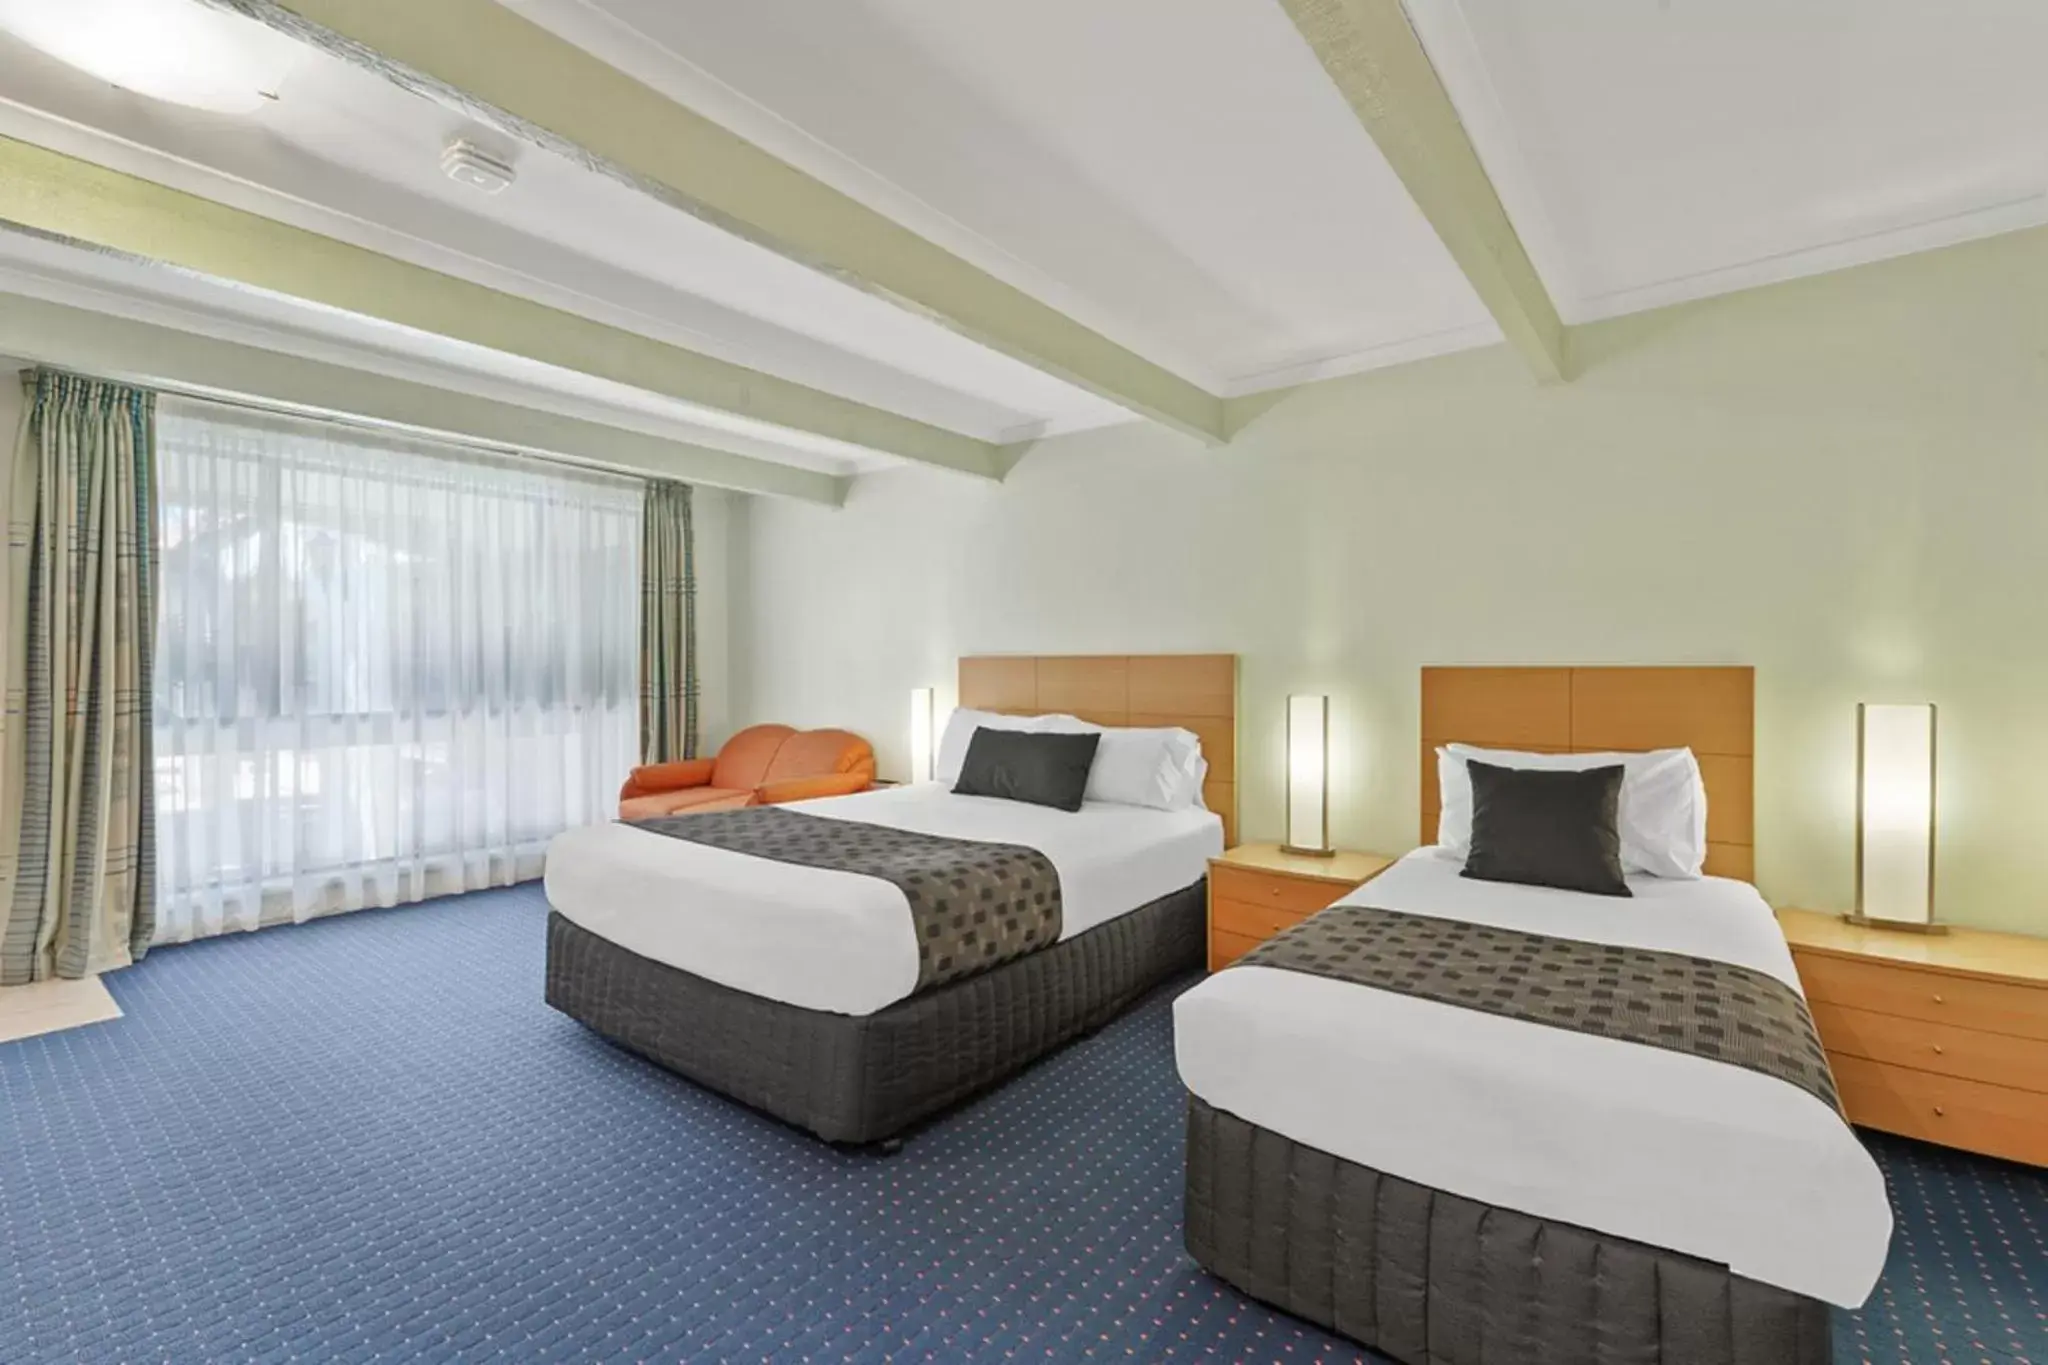 Bedroom, Bed in Quality Resort Siesta